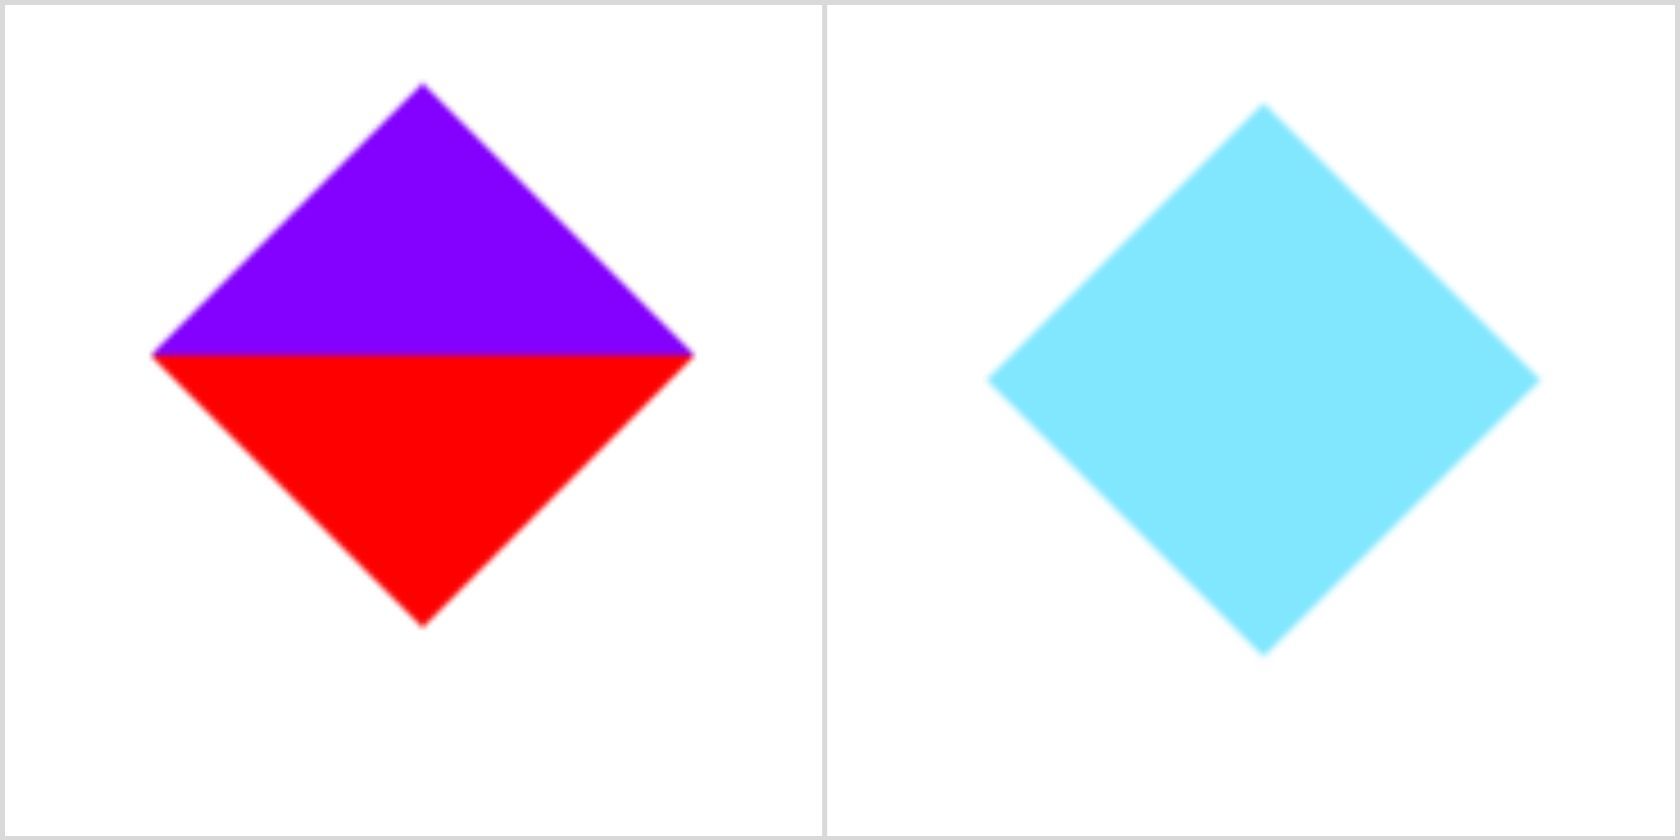 Diamond shape using CSS